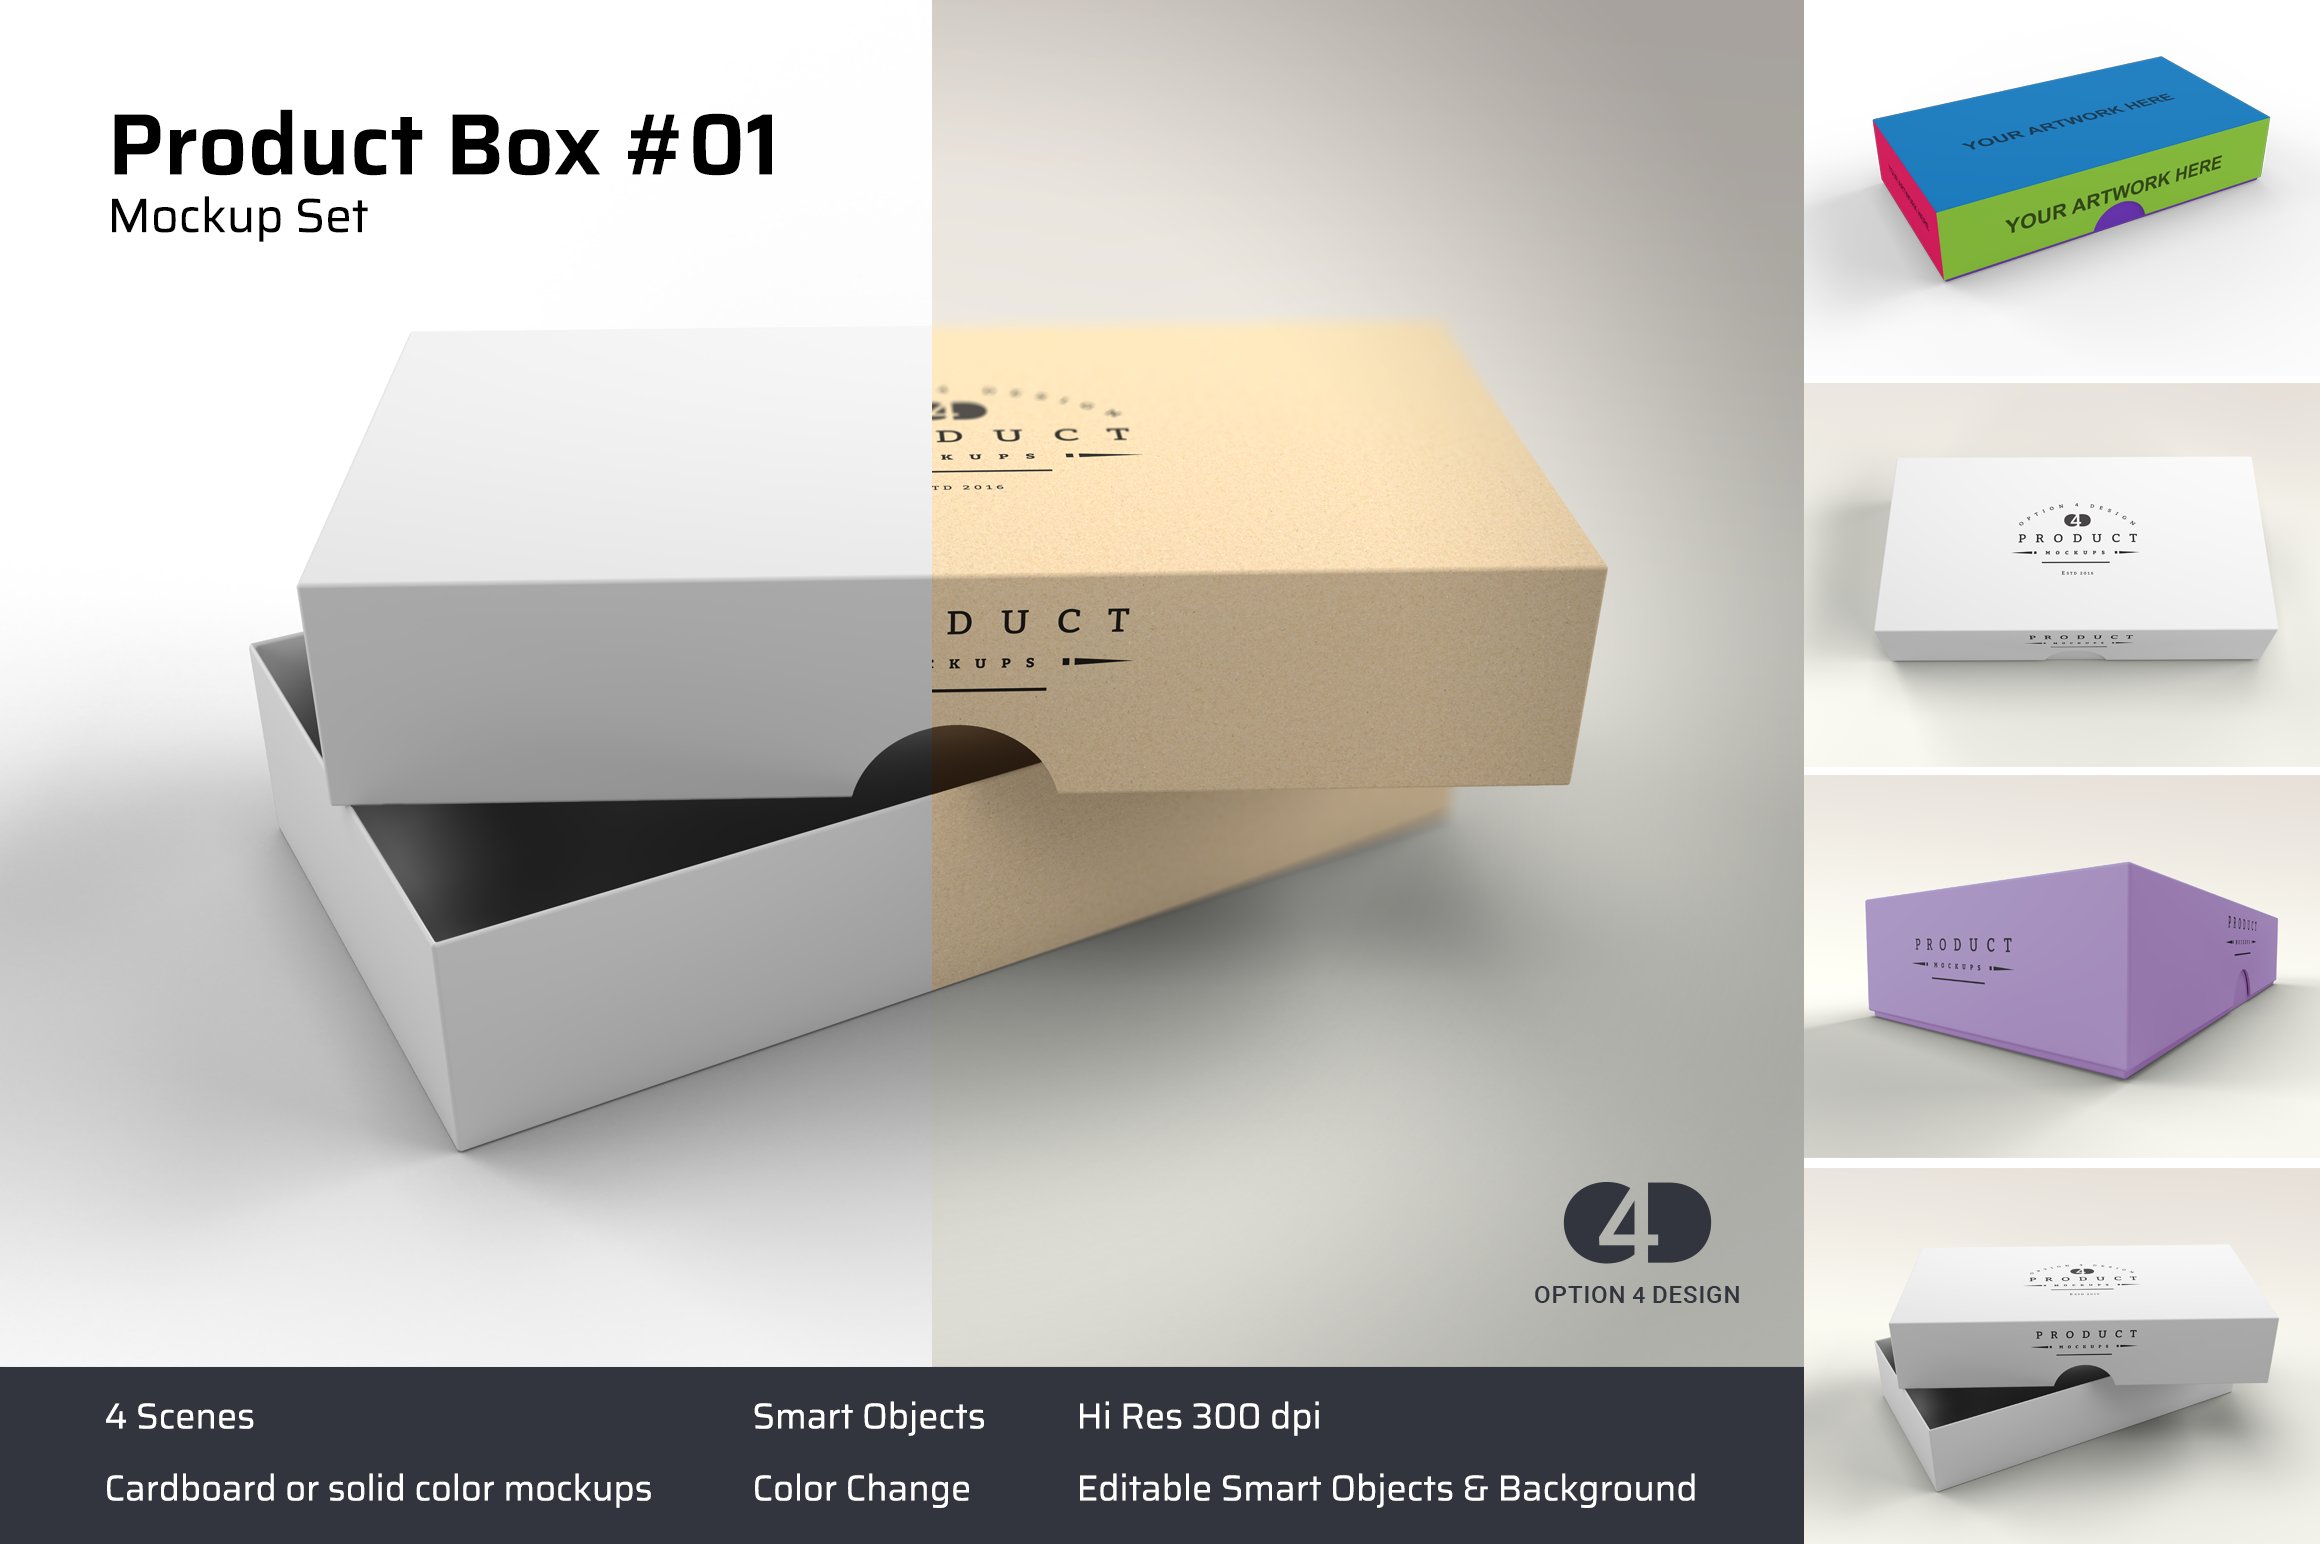 Product Box Mockup #01 cover image.